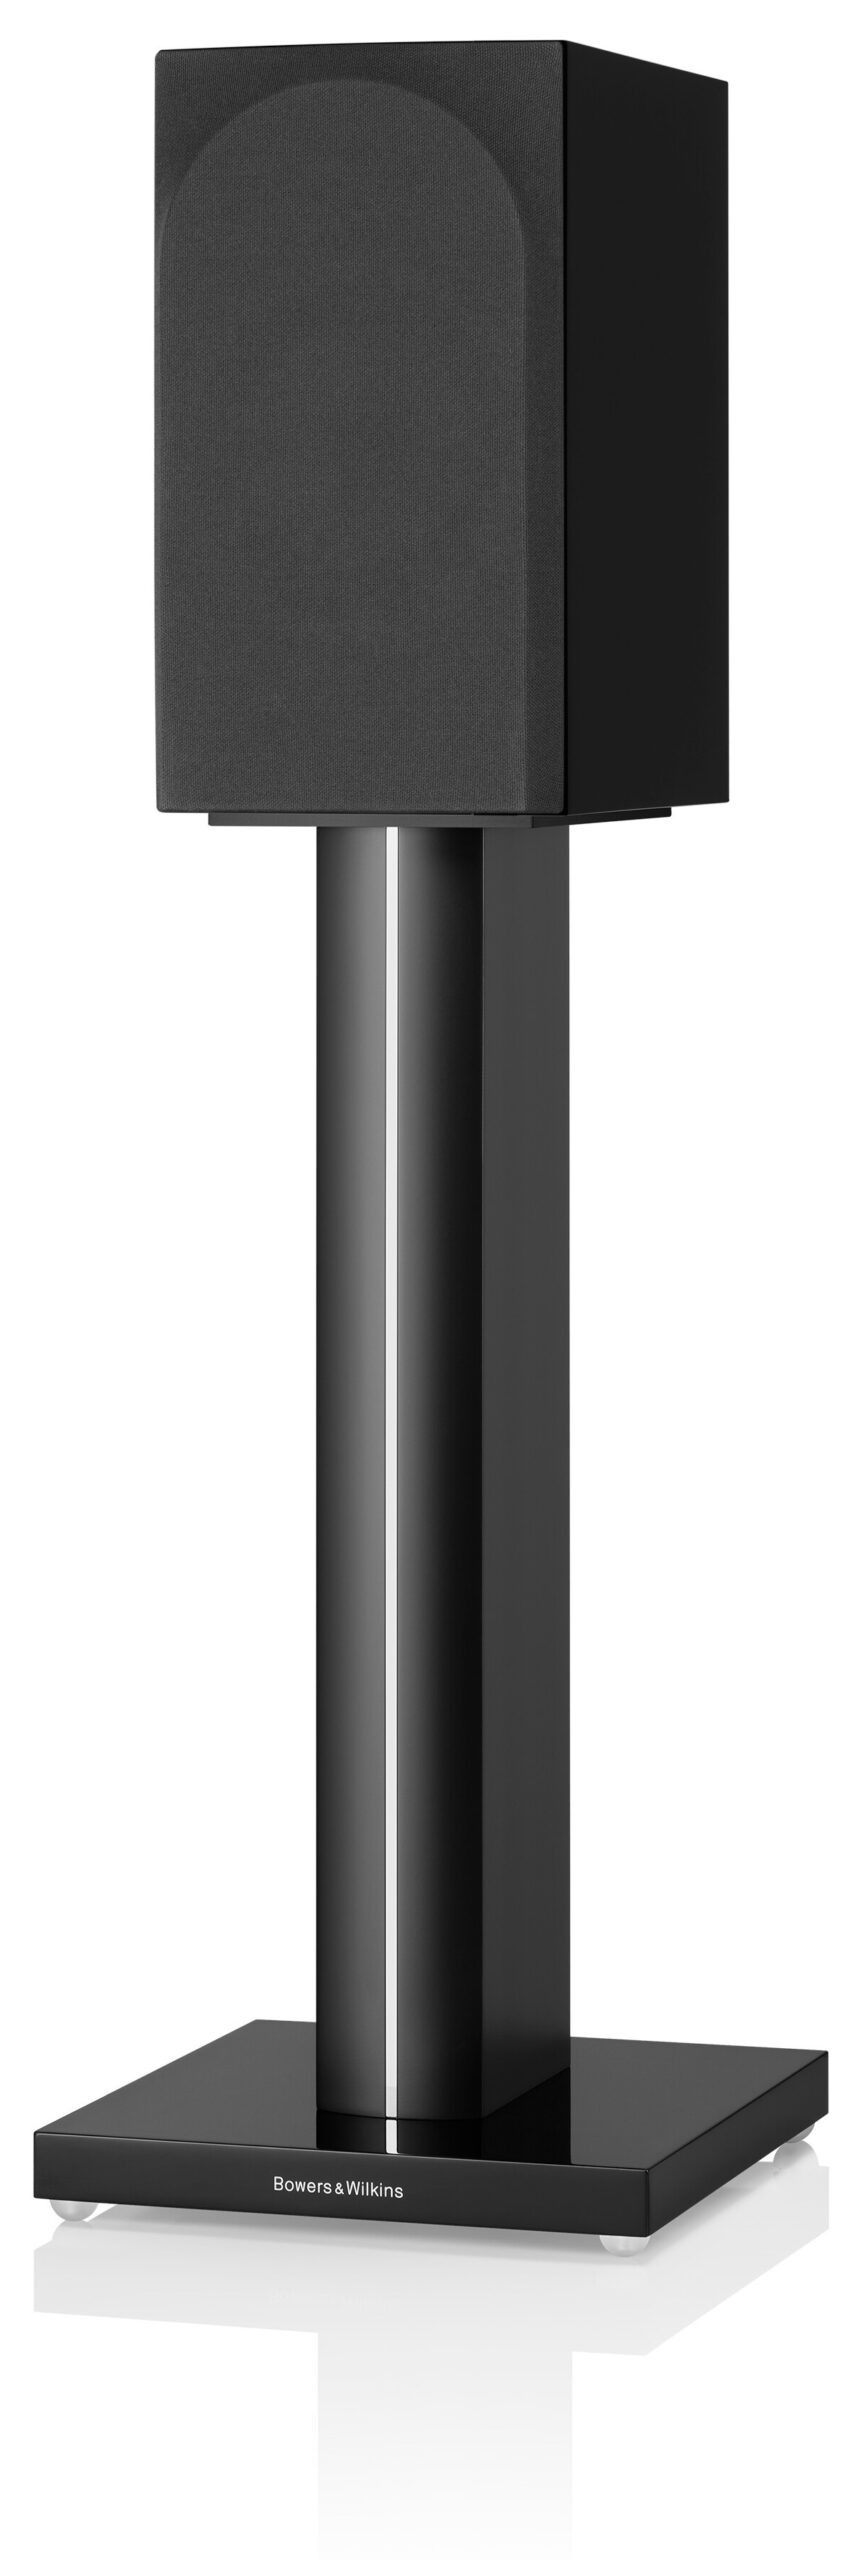 Bowers & Wilkins 706 S3 gloss black - Boekenplank speaker